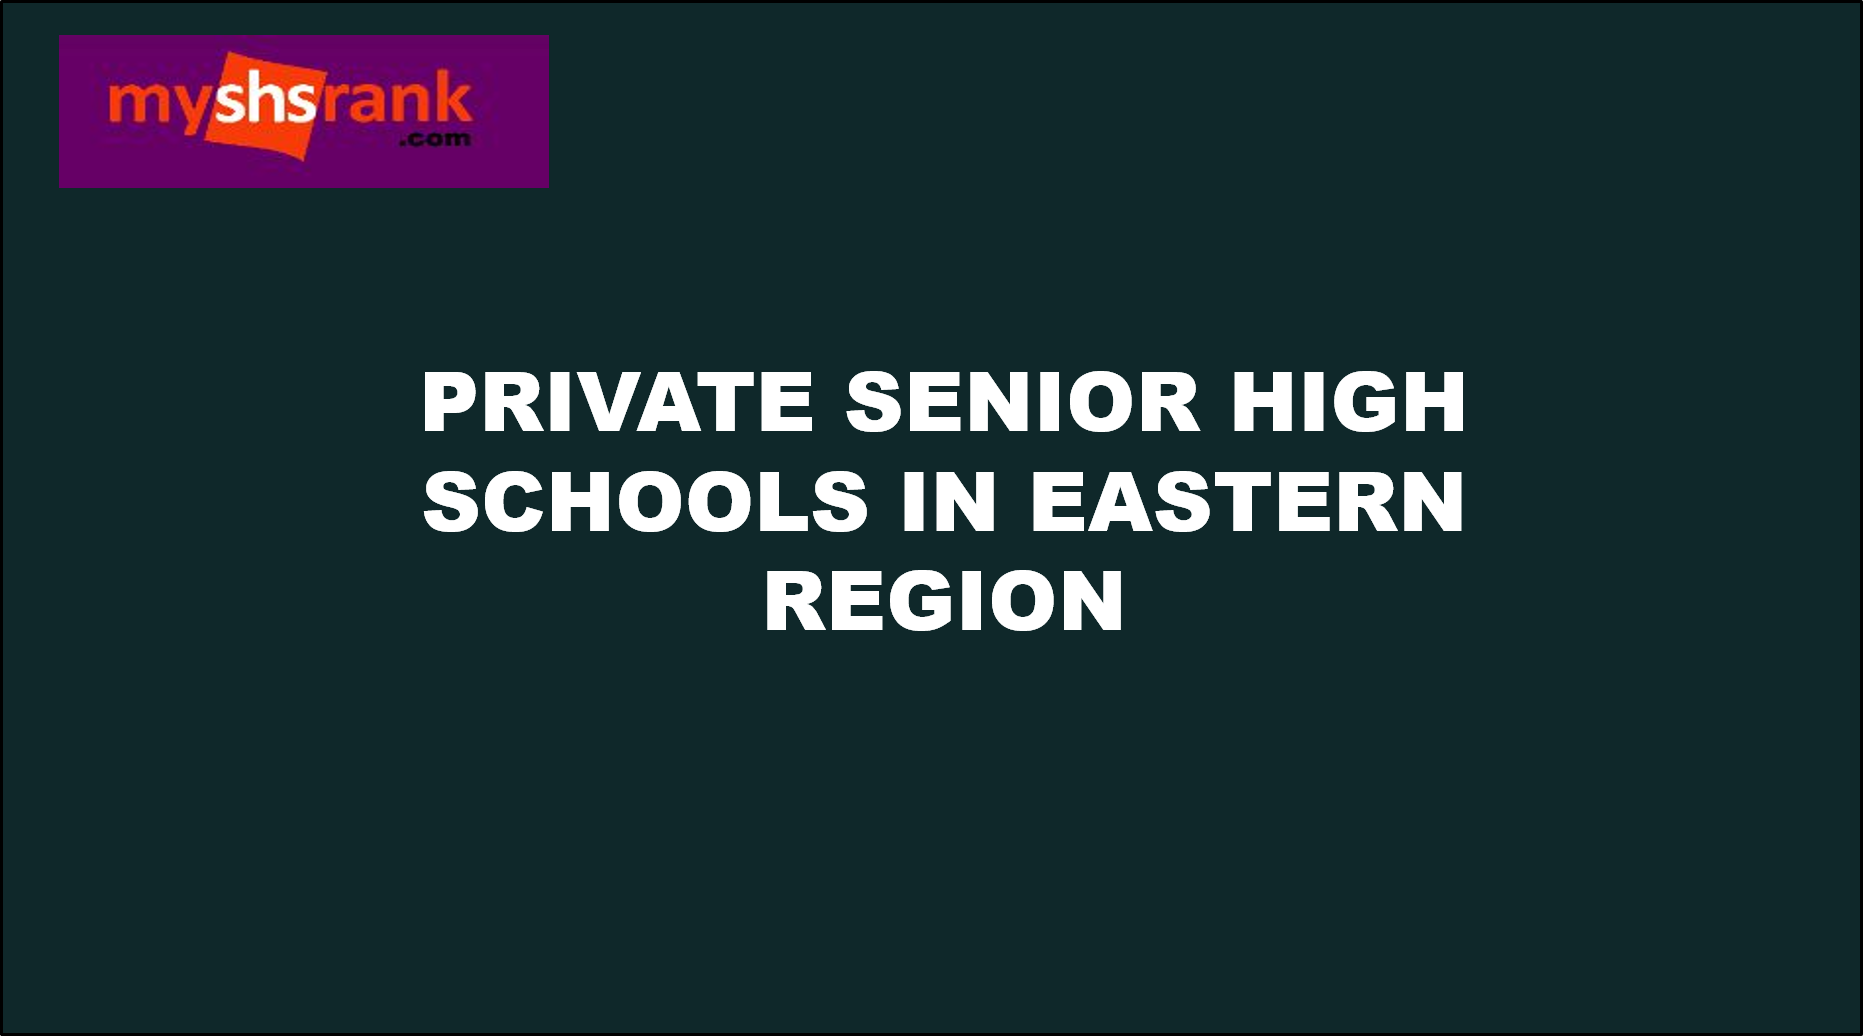 Private senior high schools in eastern region